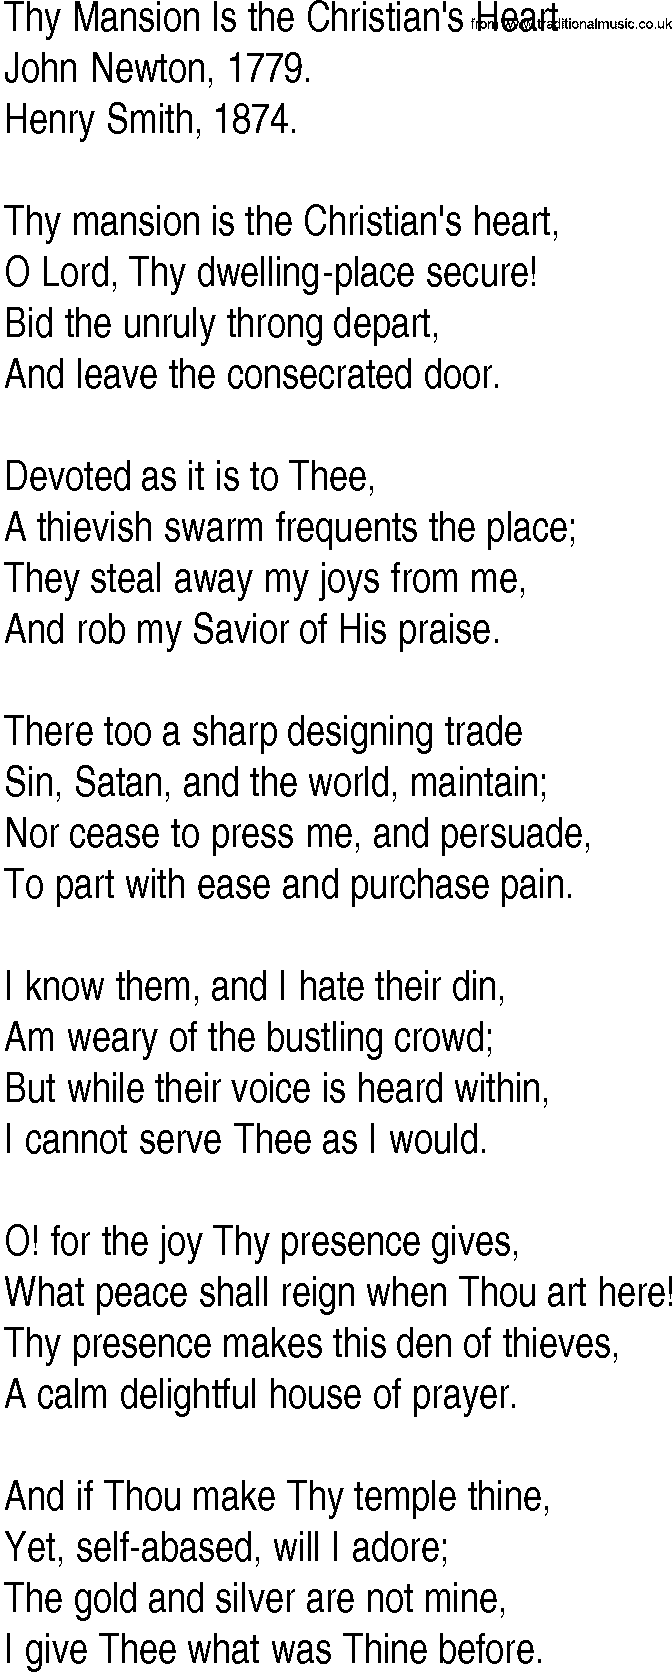 Hymn and Gospel Song: Thy Mansion Is the Christian's Heart by John Newton lyrics